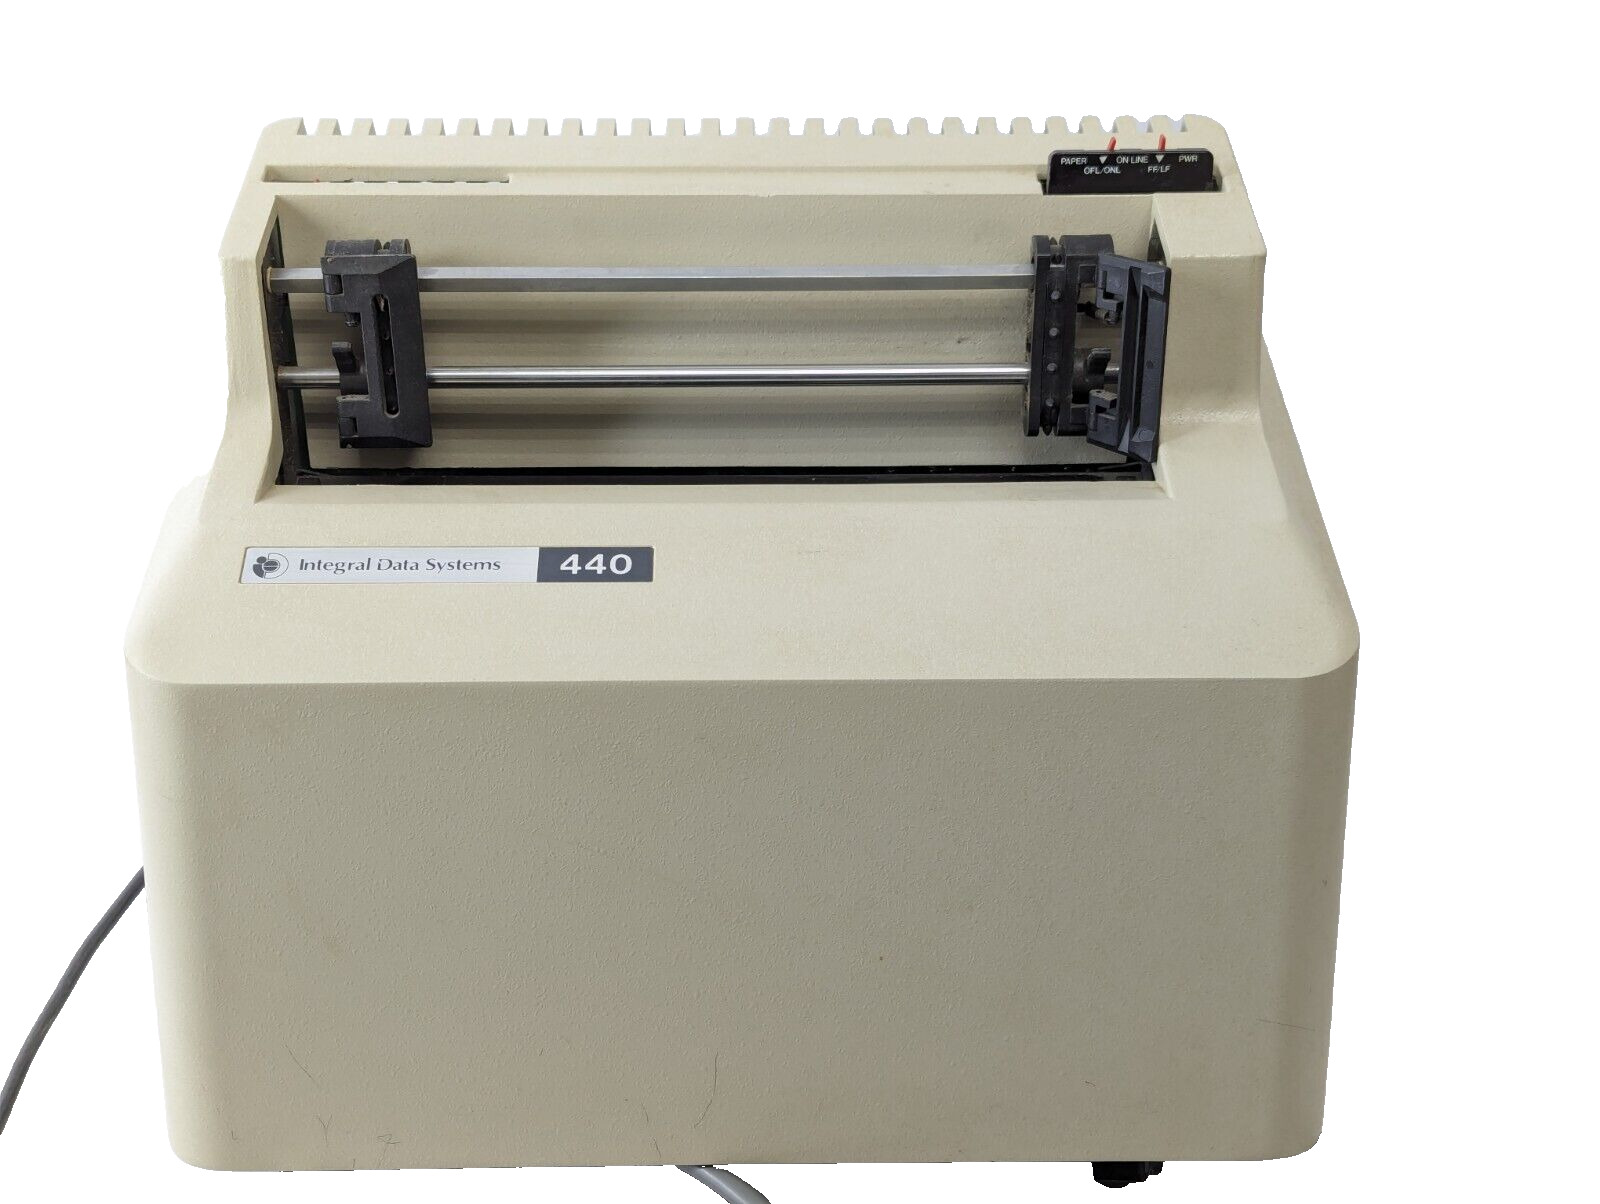 Integral Data Systems IDS PAPER TIGER Printer Model 440 Vintage Impact Printer